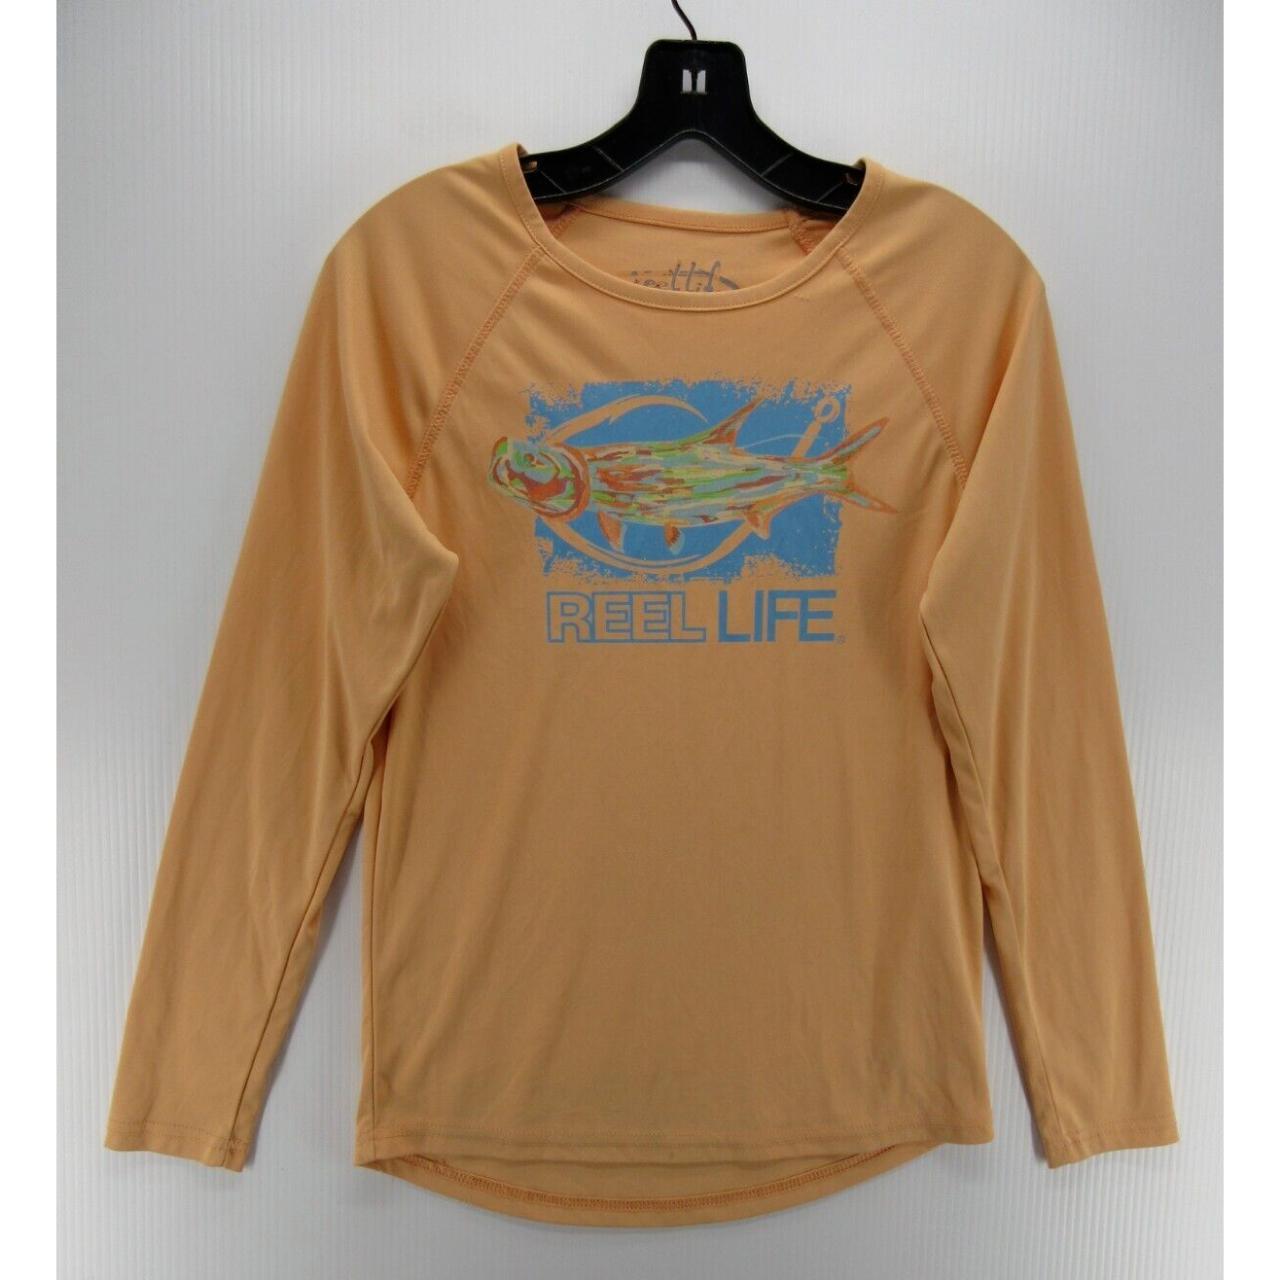 Reel Life Top Women Medium Orange Shirt Pullover - Depop